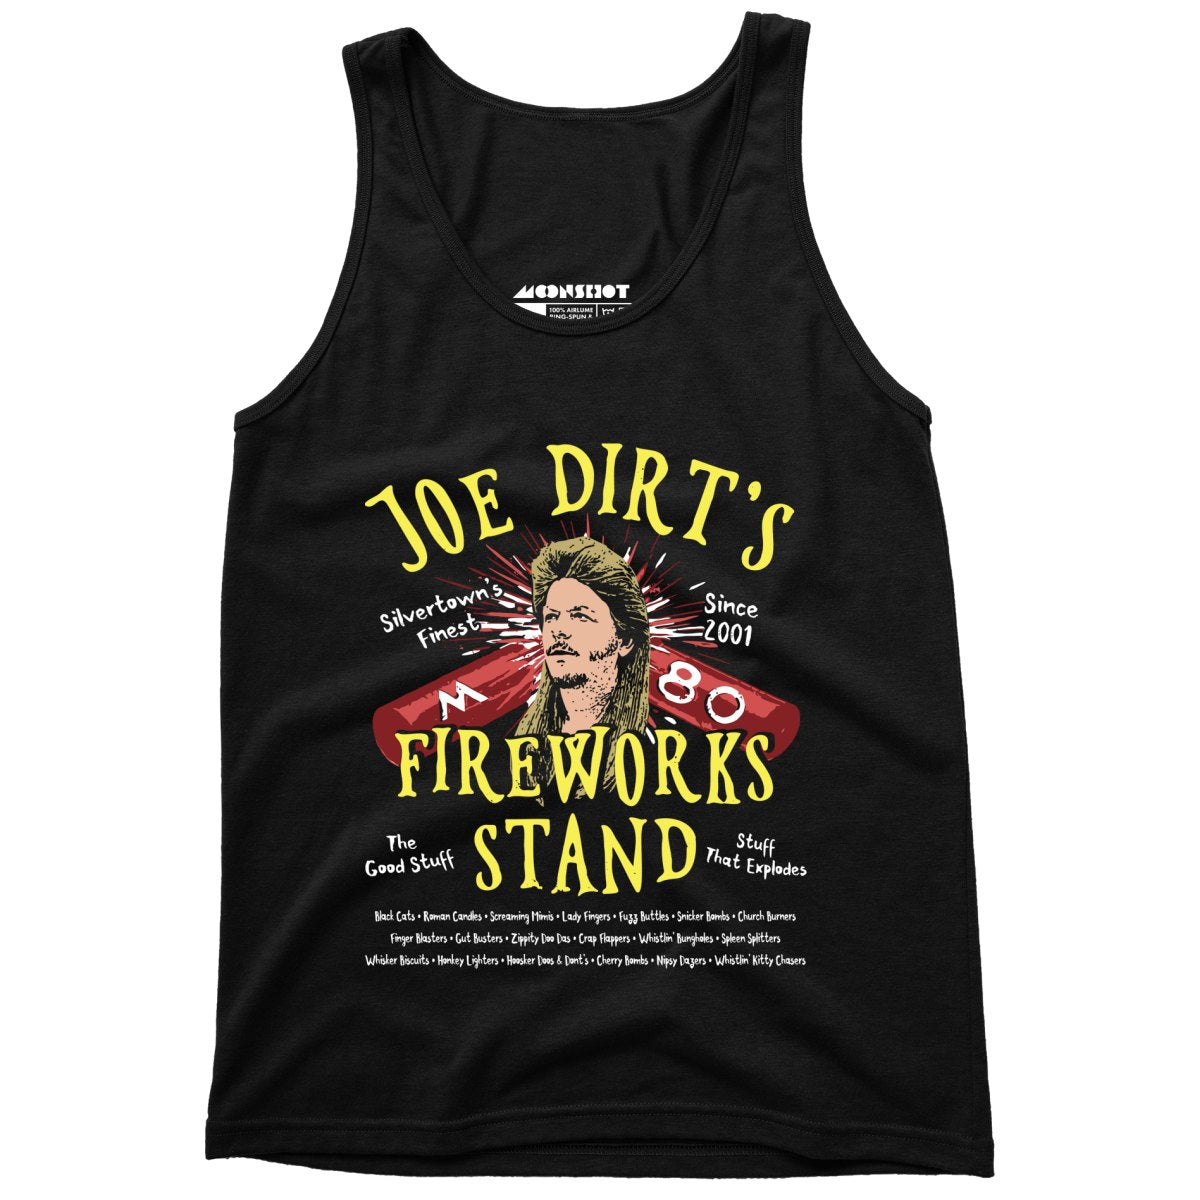 Joe Dirt's Fireworks Stand - Unisex Tank Top